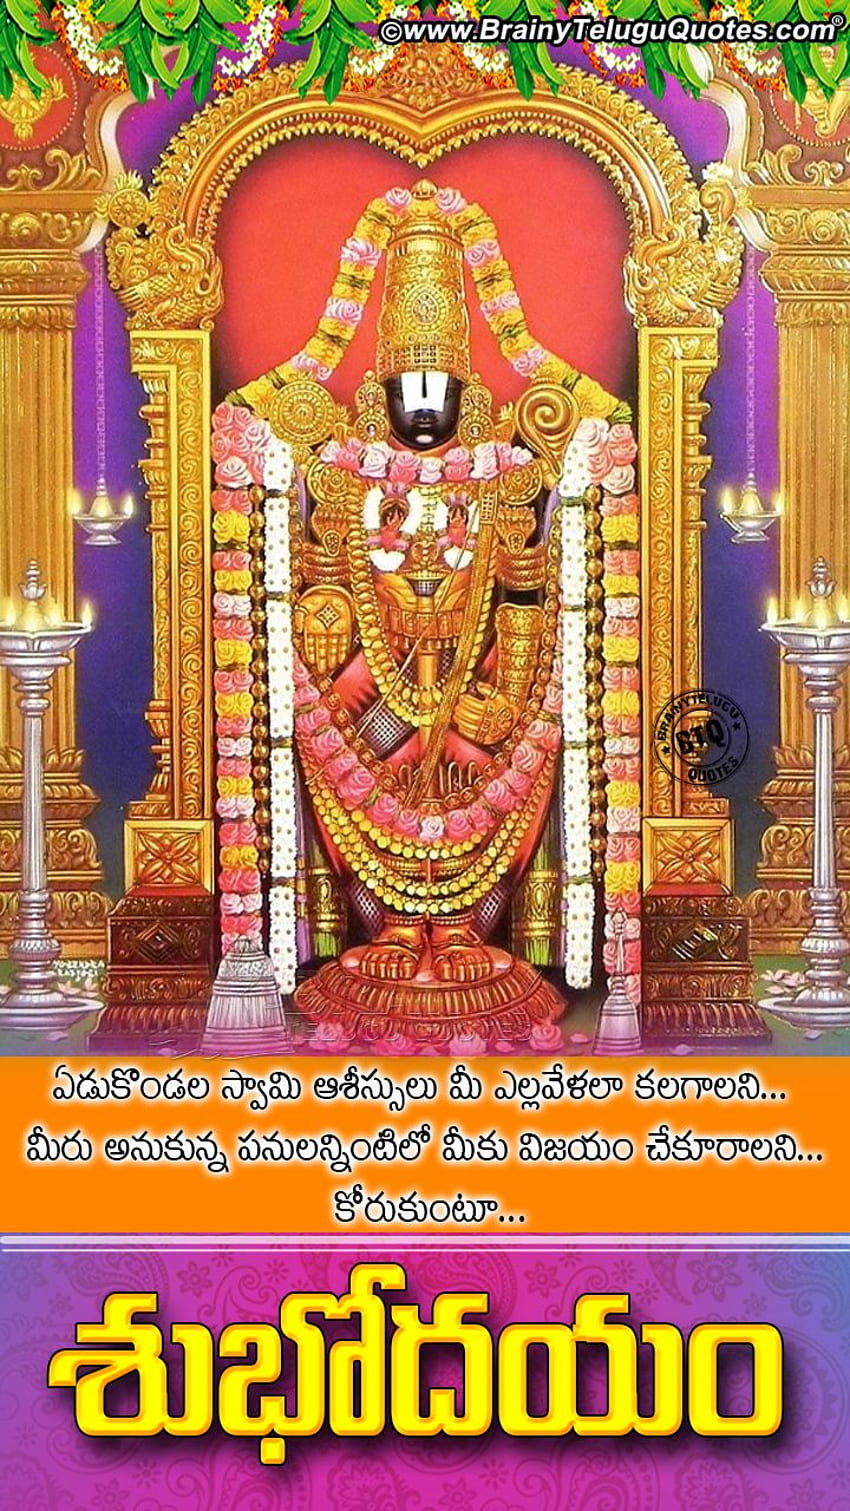 Telugu Venkateswara swami 경과 함께하는 좋은 아침 png . 텔루구어 따옴표. 영어 인용문. 힌디어 따옴표. 타밀어 따옴표. 인사말, Lord Venkatesha HD 전화 배경 화면